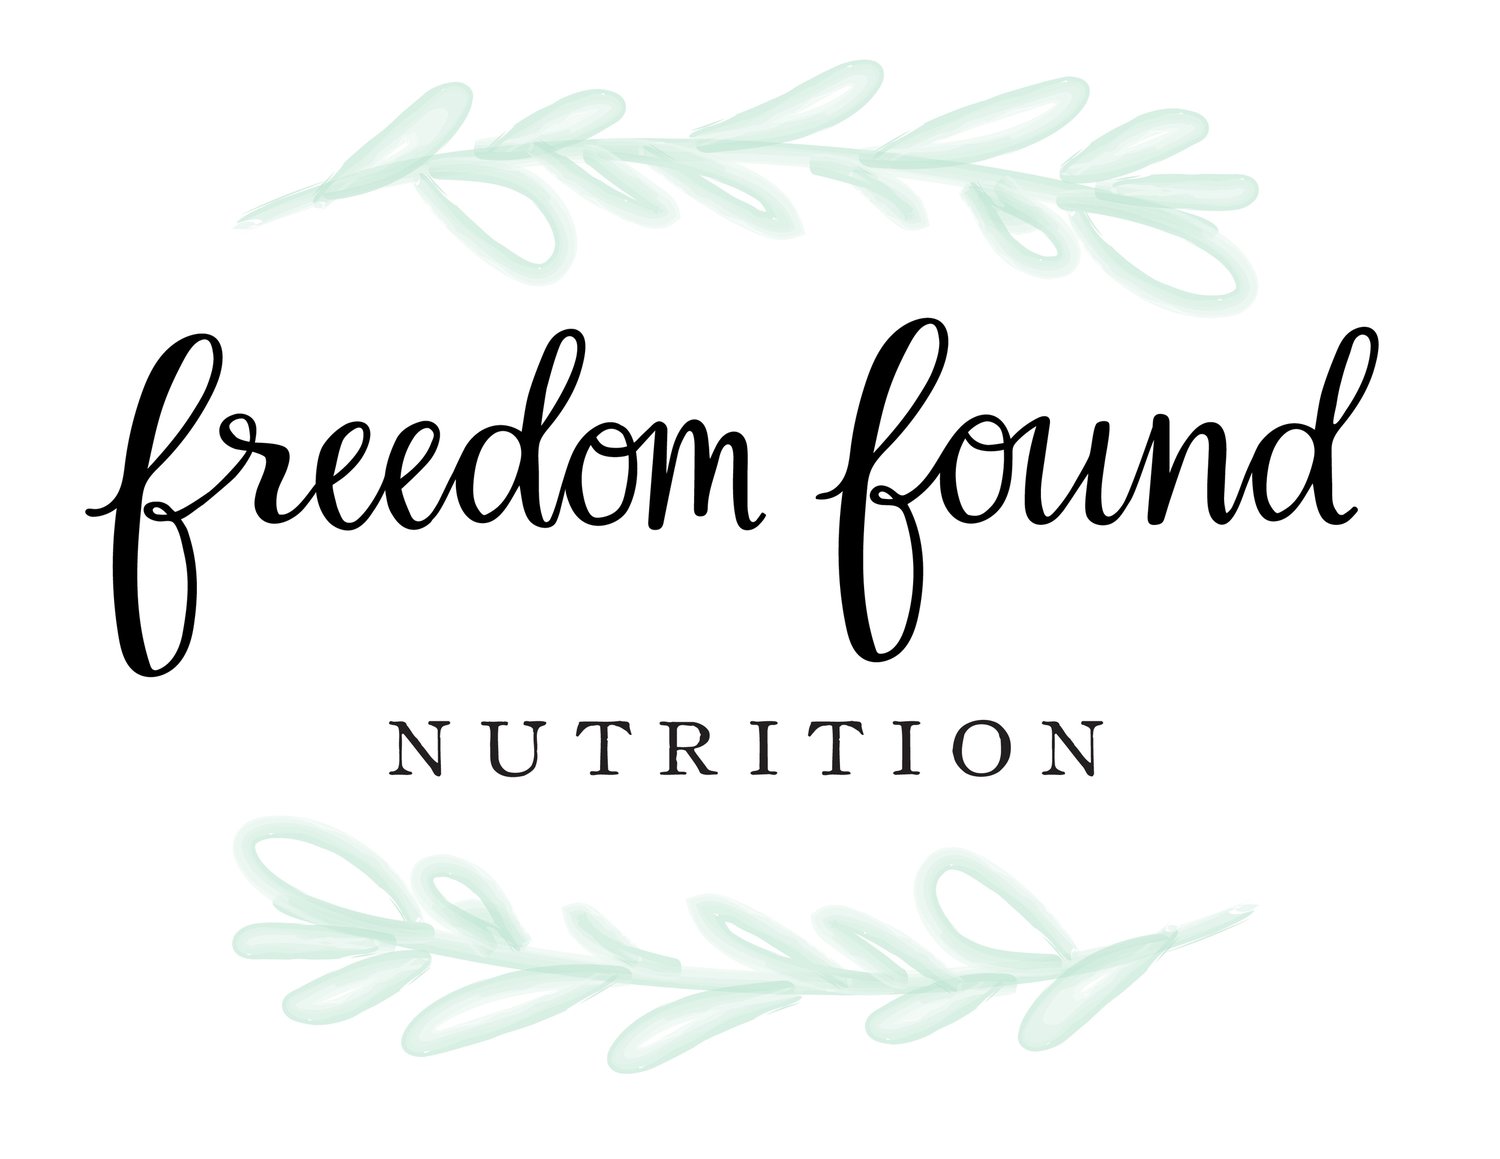 Freedom Found Nutrition